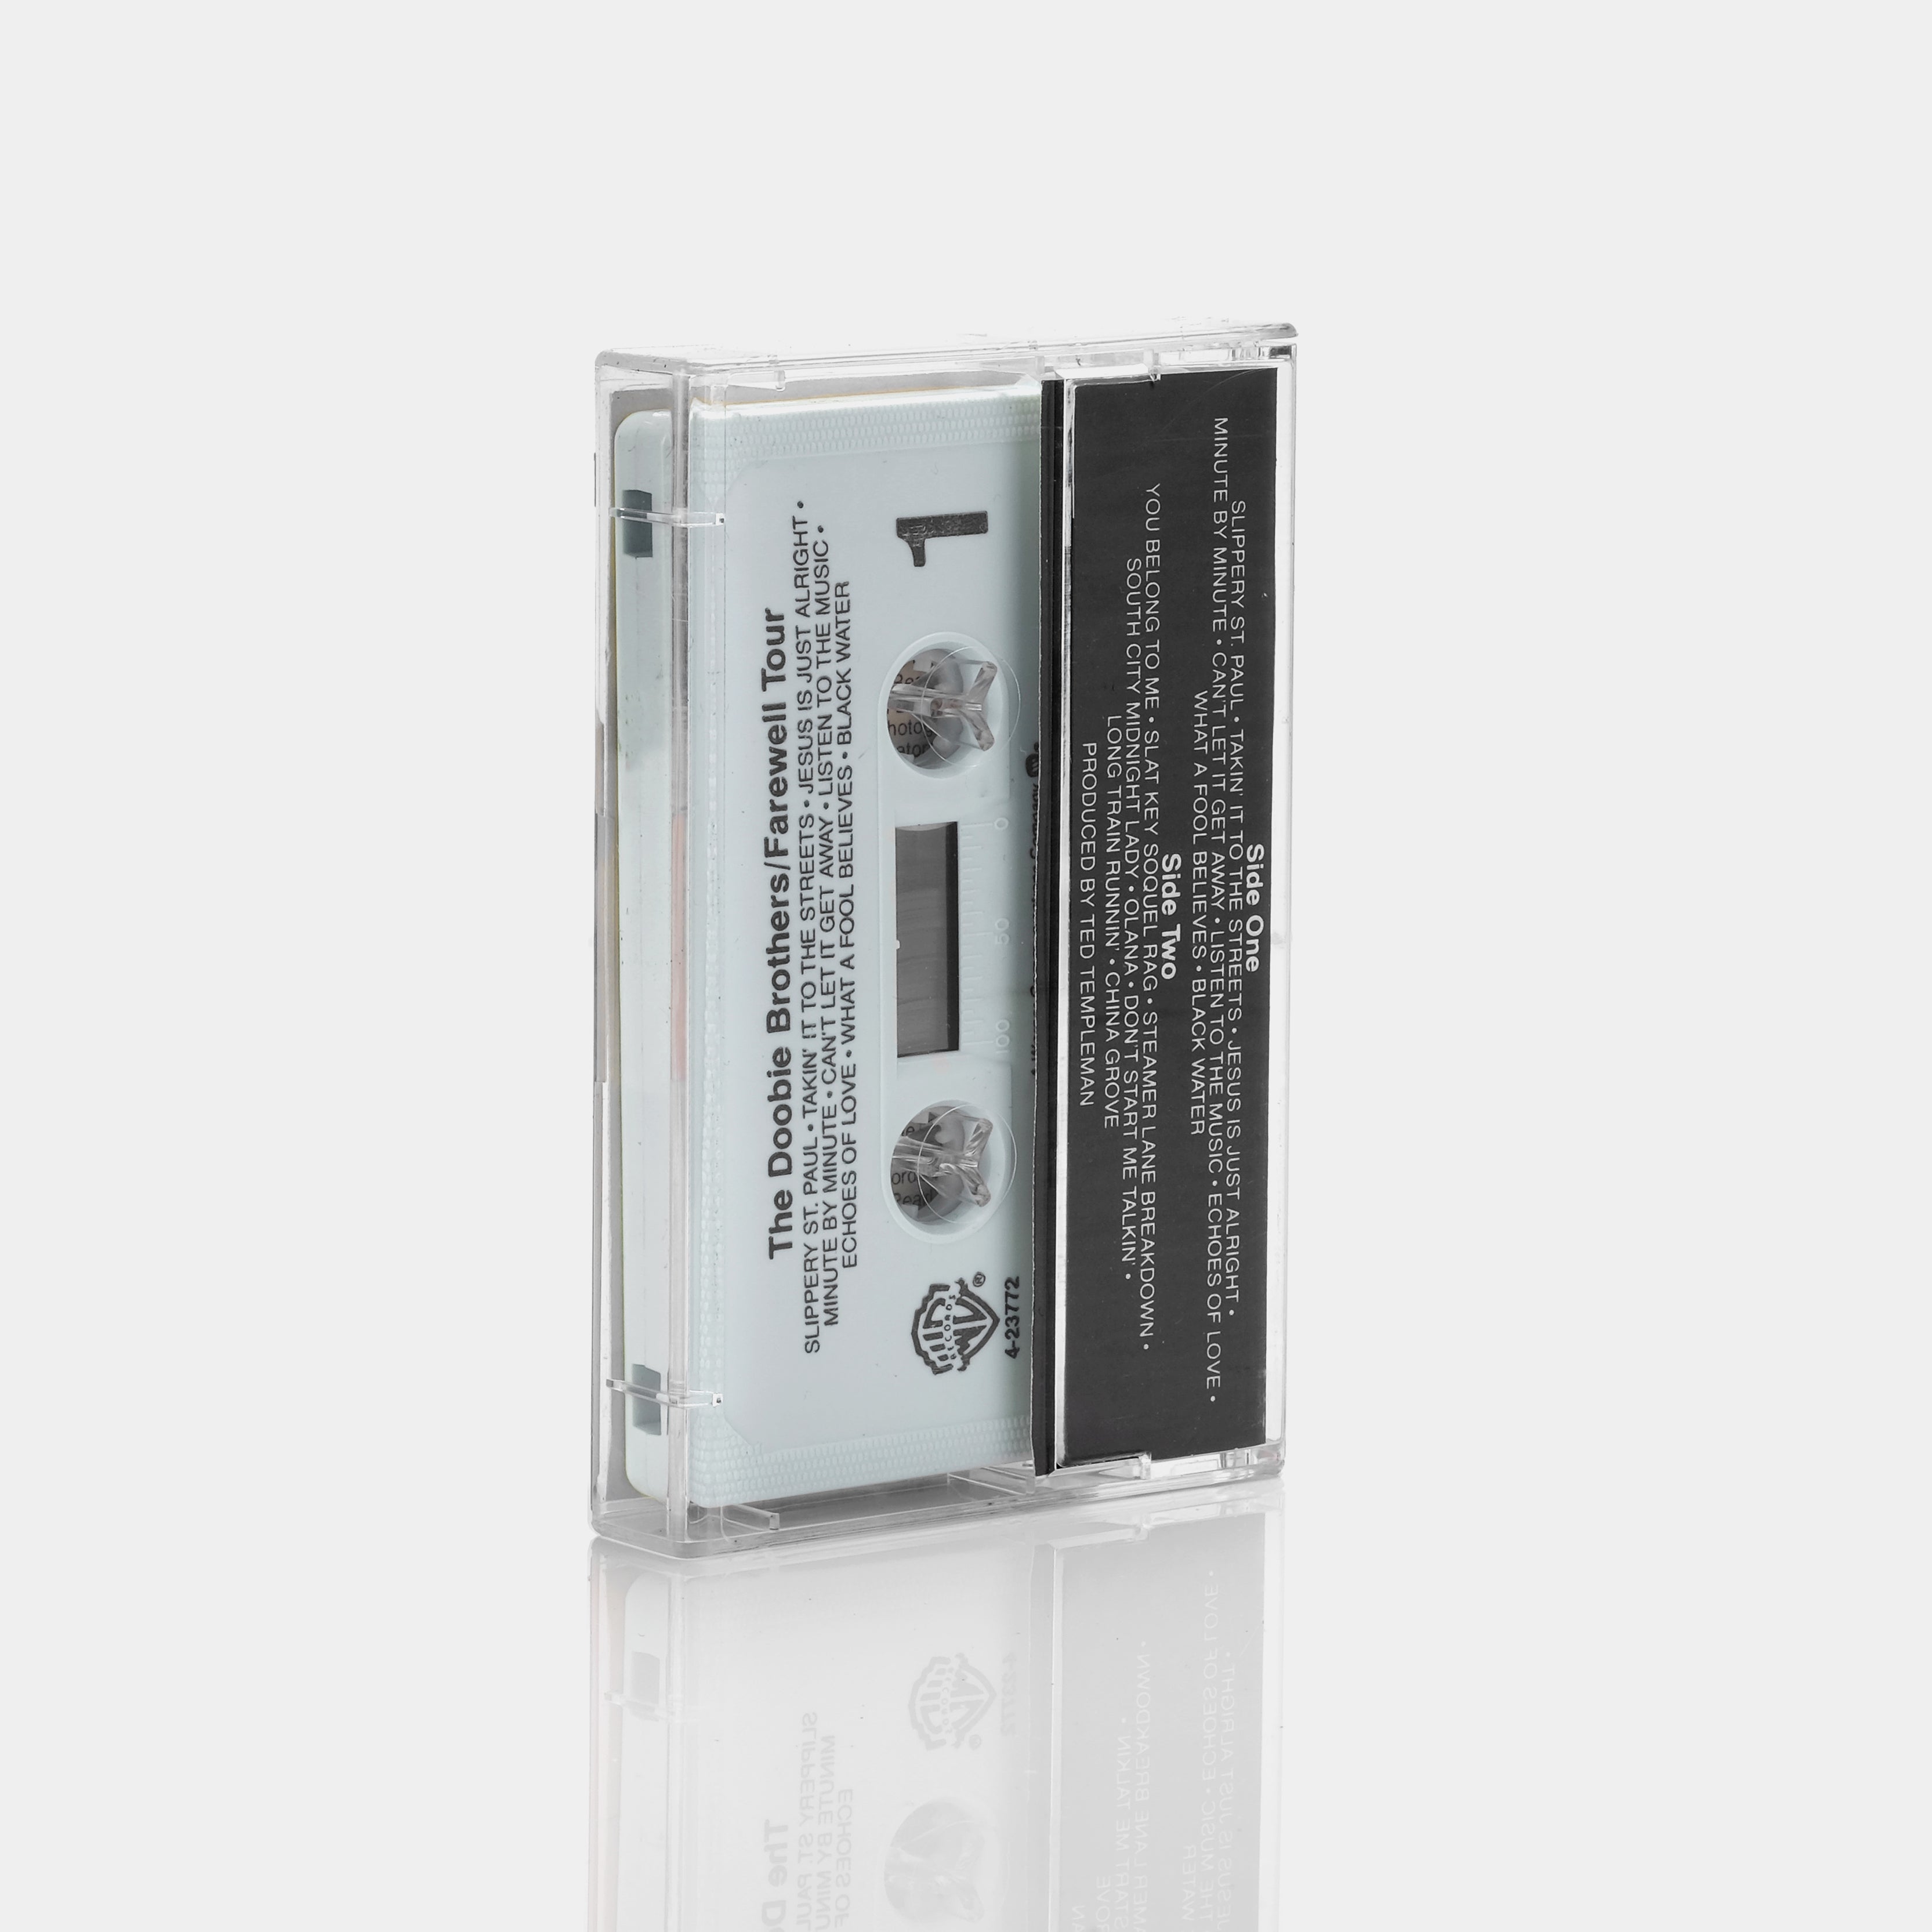 The Doobie Brothers - Farewell Tour Cassette Tape